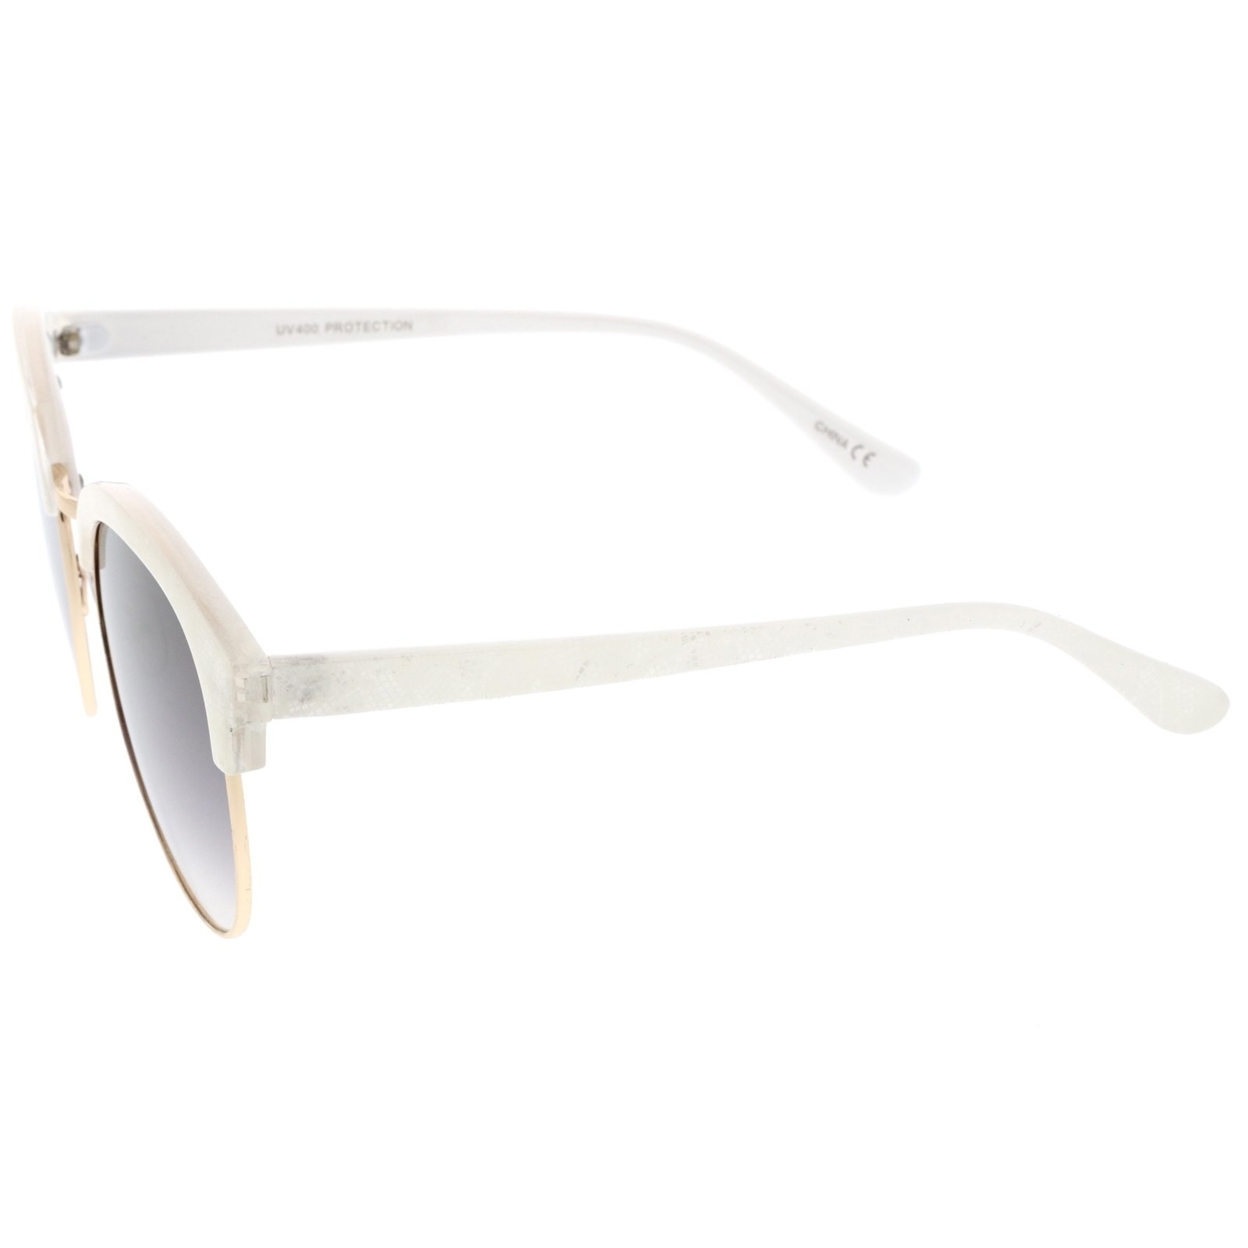 Oversize Metallic Horn Rimmed Colored Mirror Lens Half-Frame Sunglasses 58mm - Dark Grey Gold / Silver Mirror